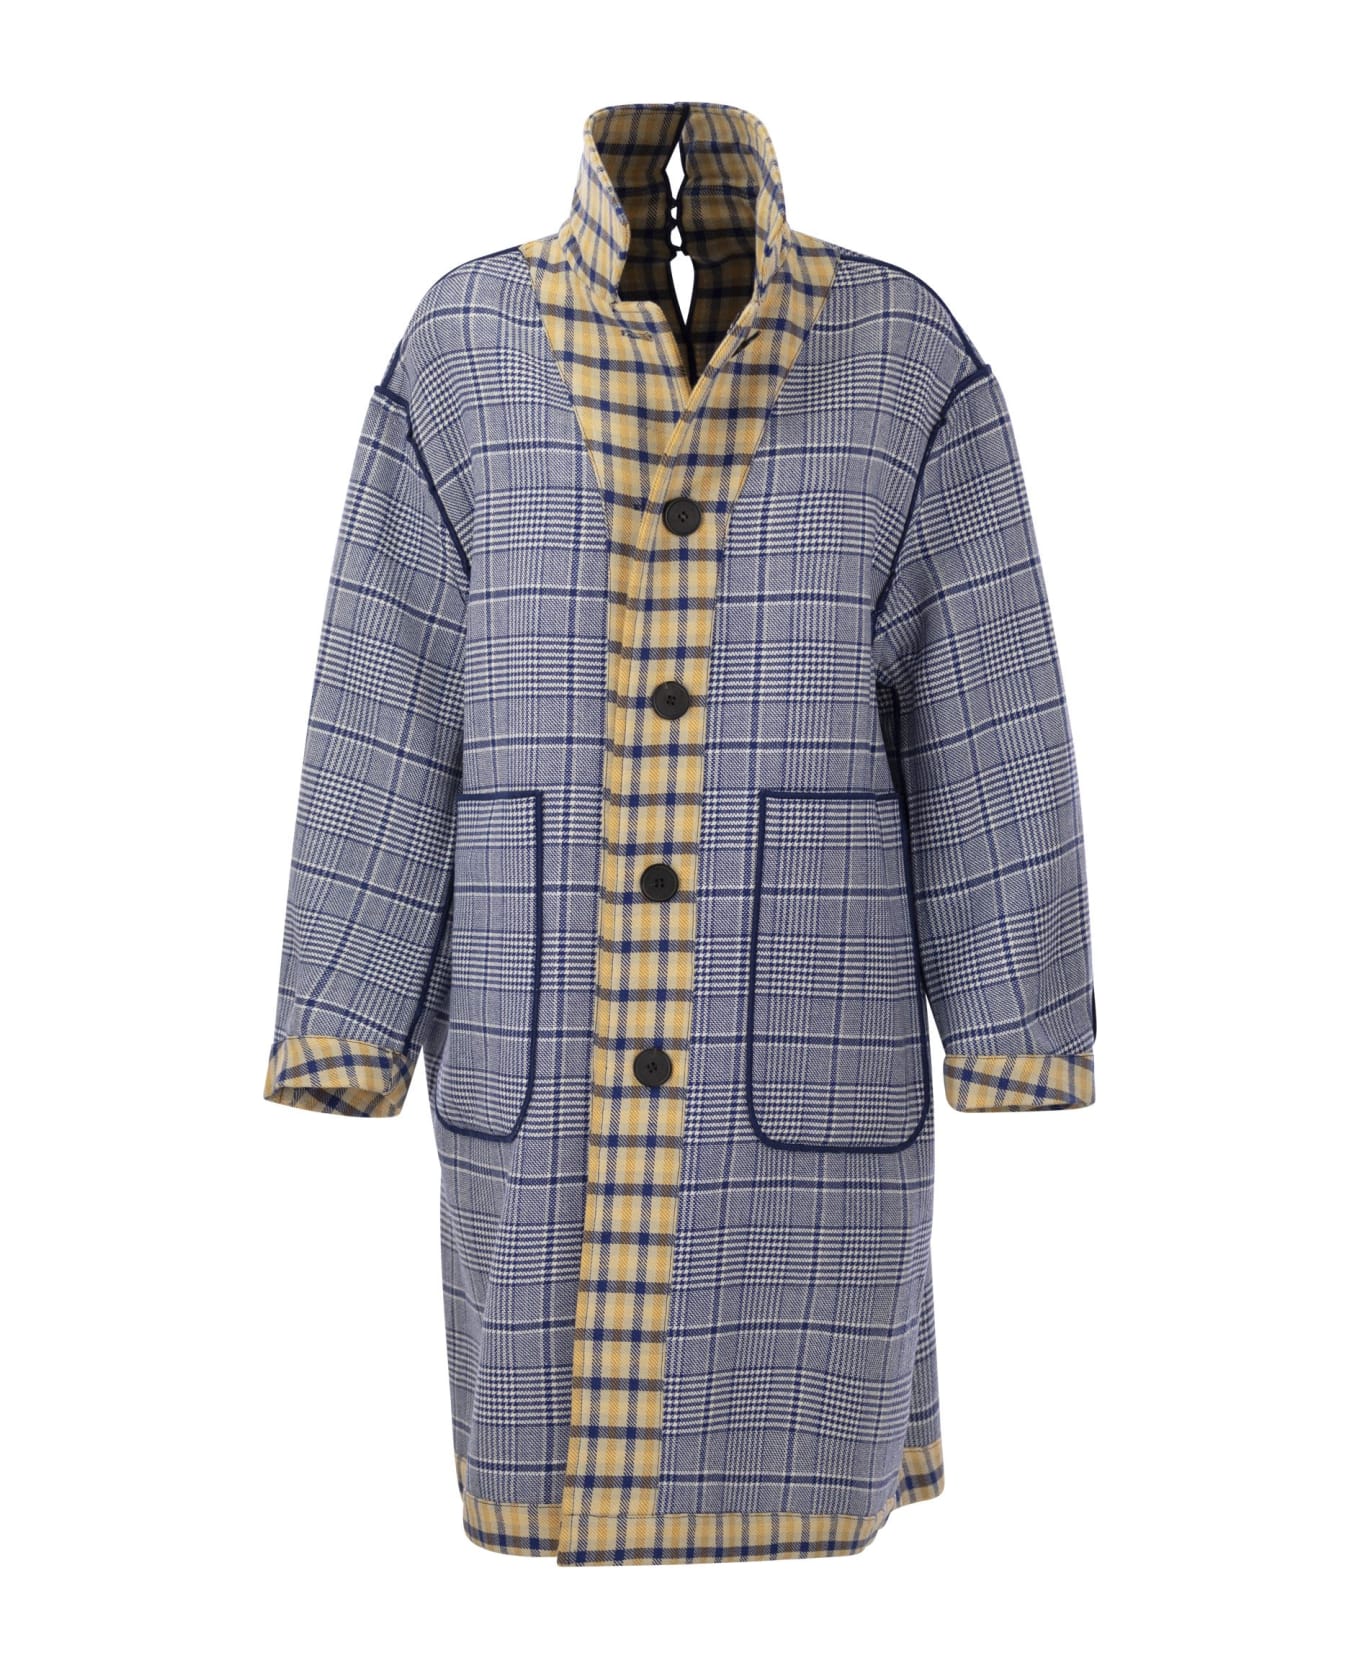 Marni Reversible Wool Coat With Check Pattern - Yellow/blue